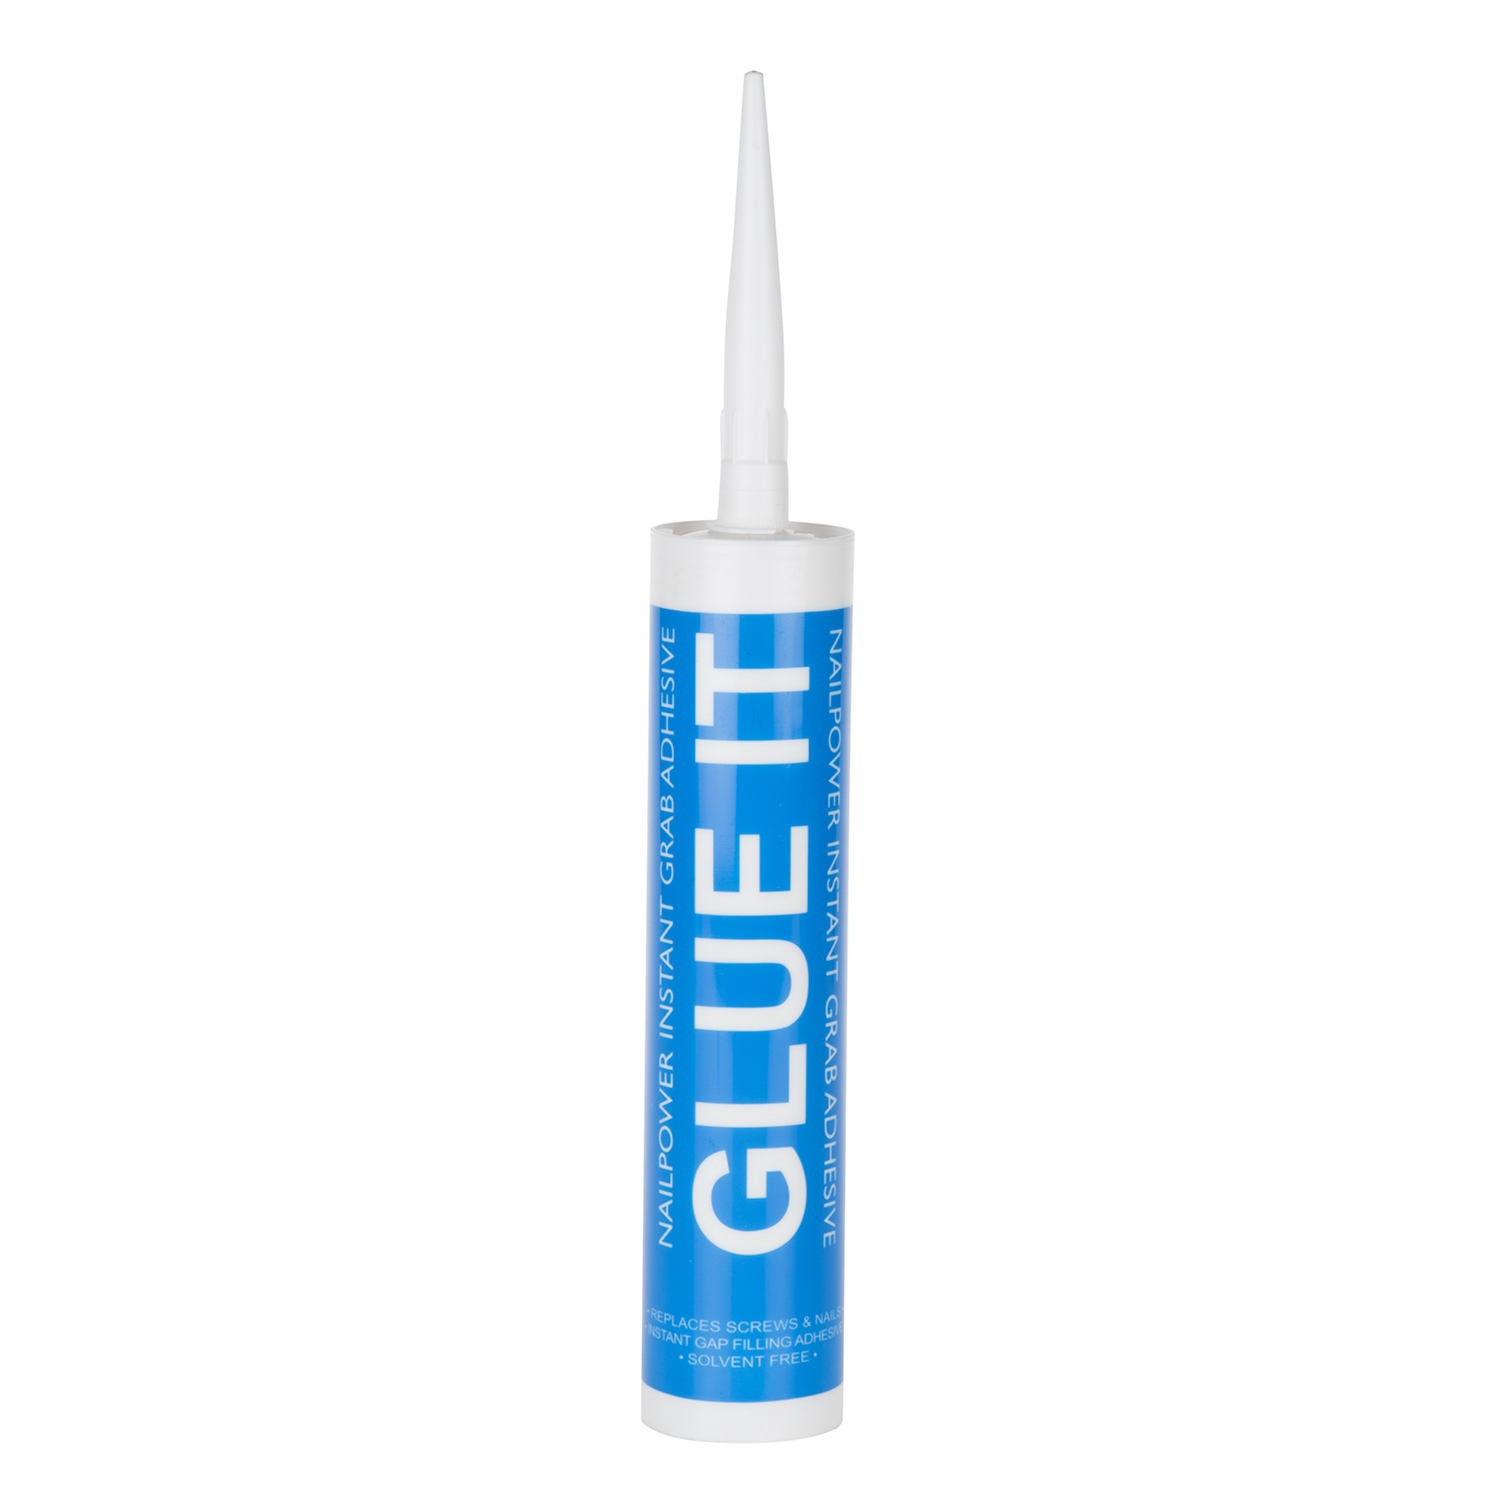 Glue It Solvent Free Grab Adhesive Image